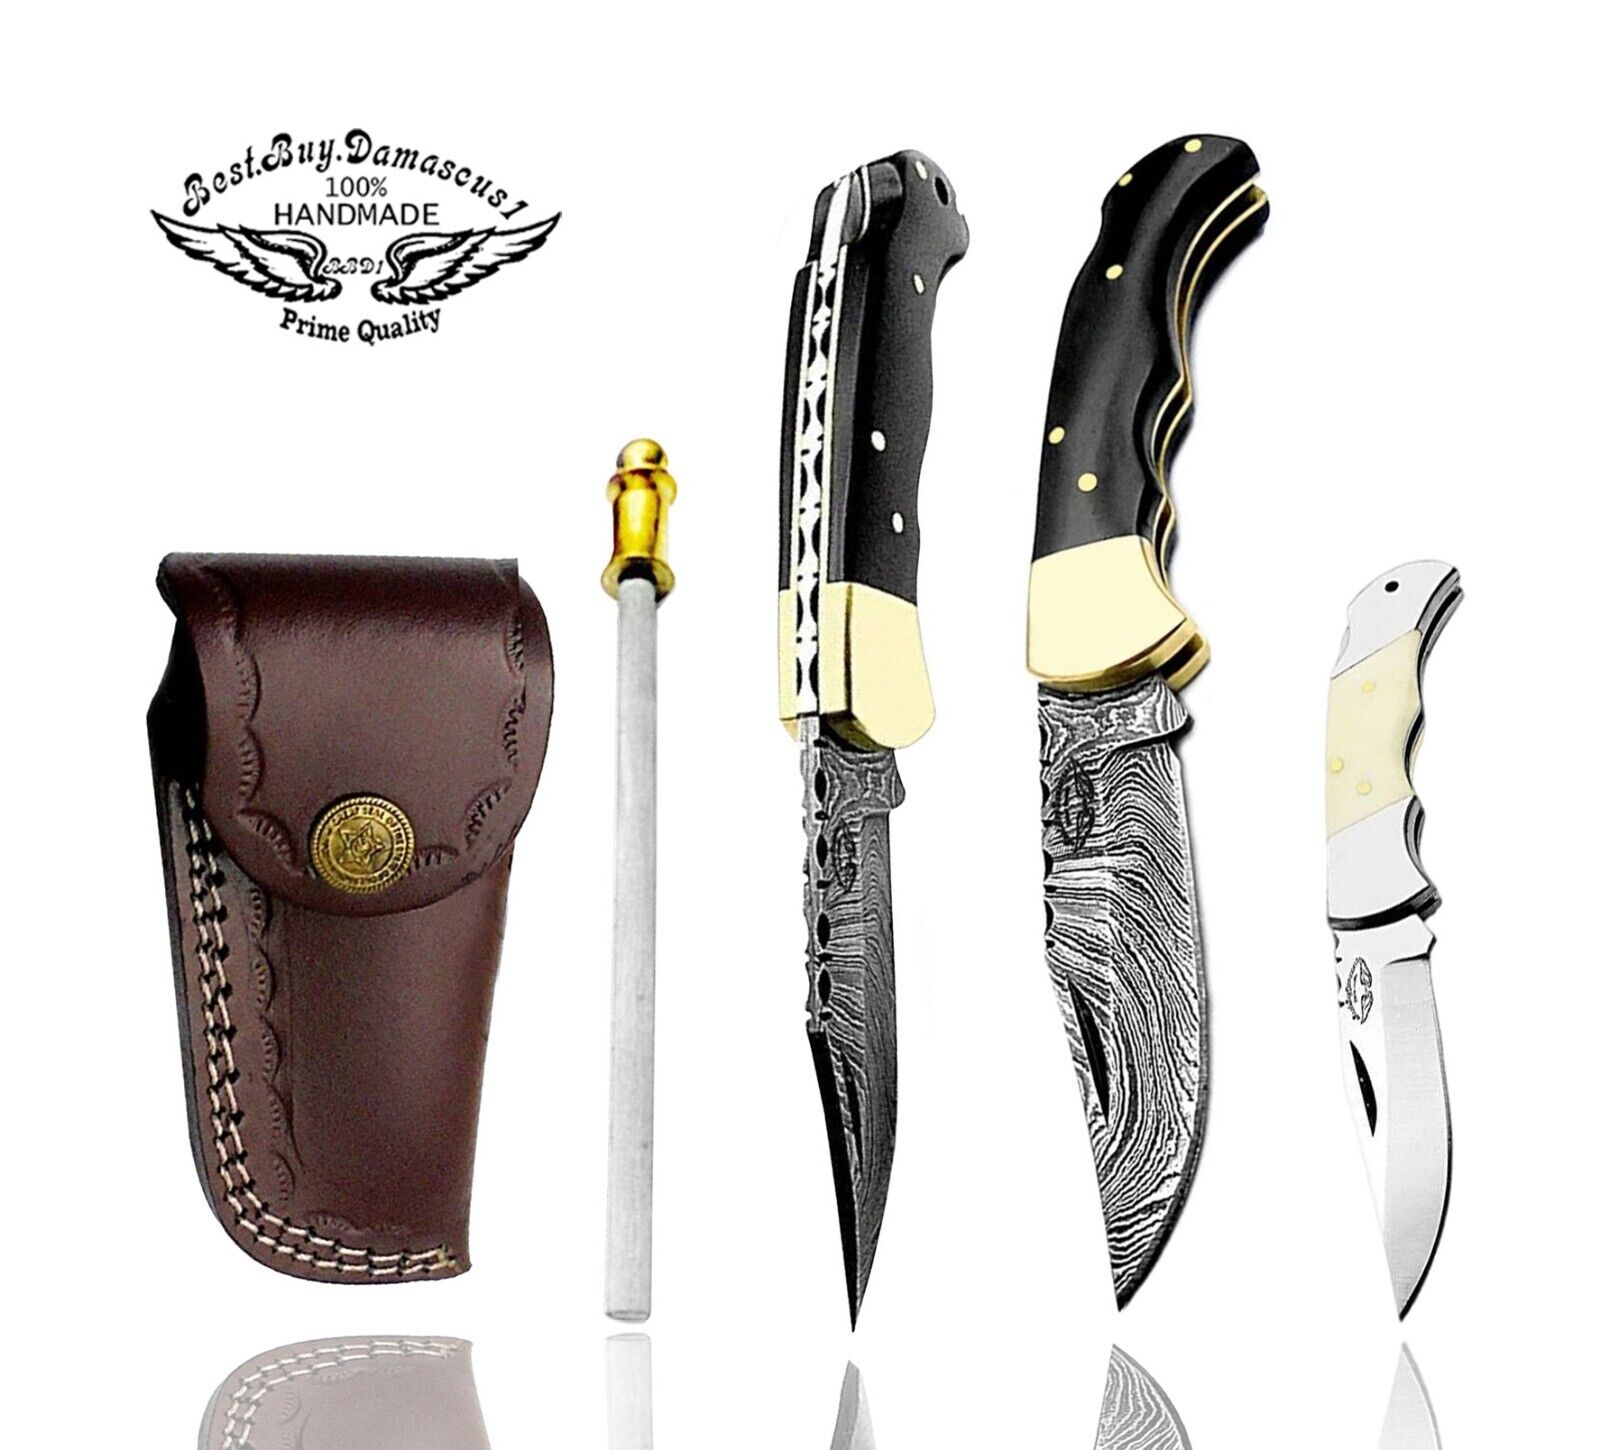 Best.Buy.Damascus1 Pocket Knife Damascus Folding Knife Set Hunting Pocket Knives